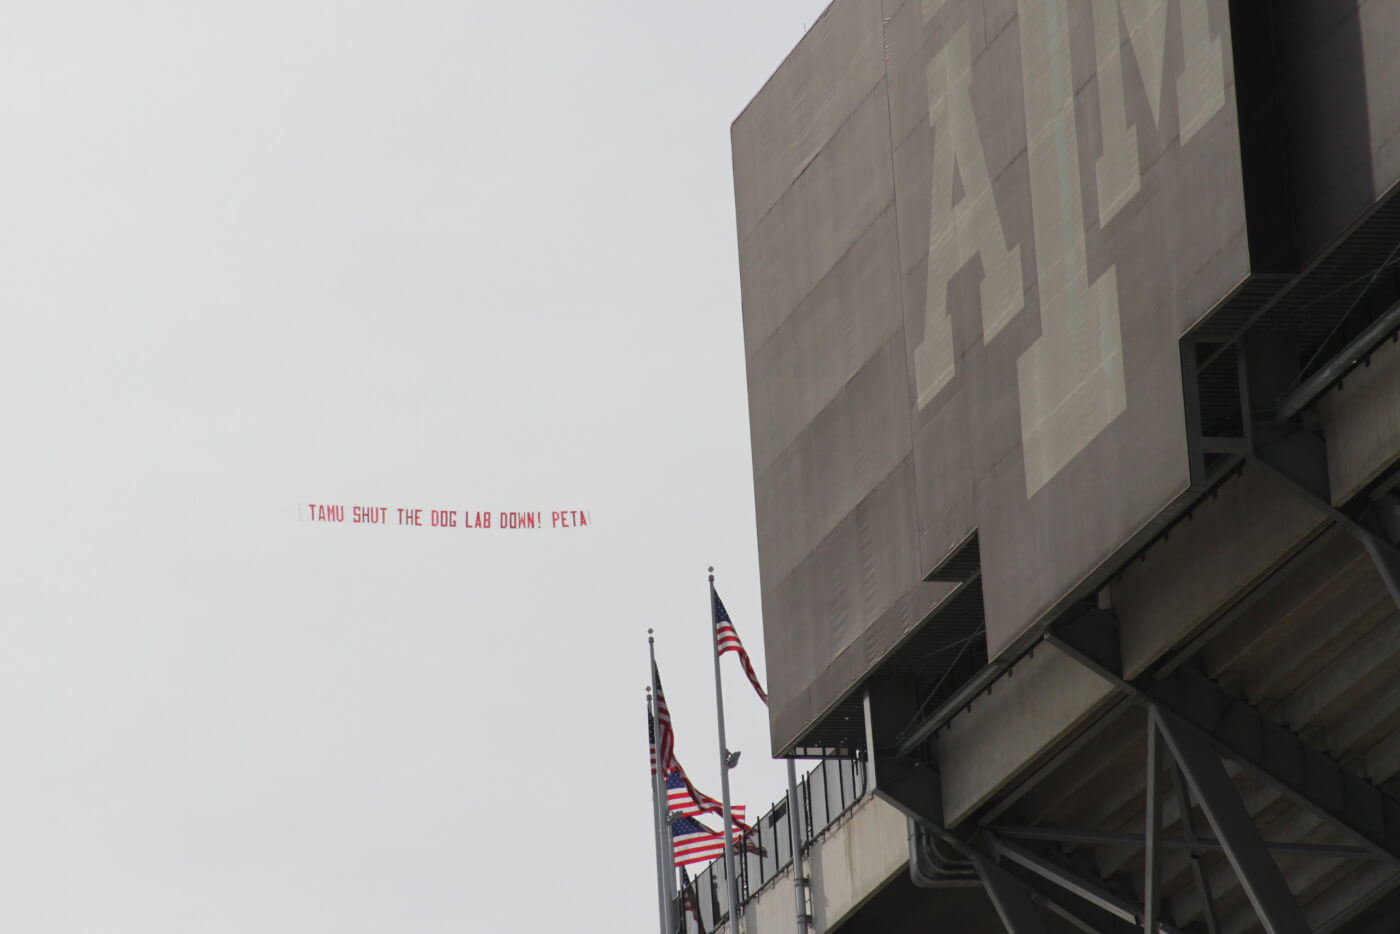 PETA sky banner flies over Texas A&M stadium